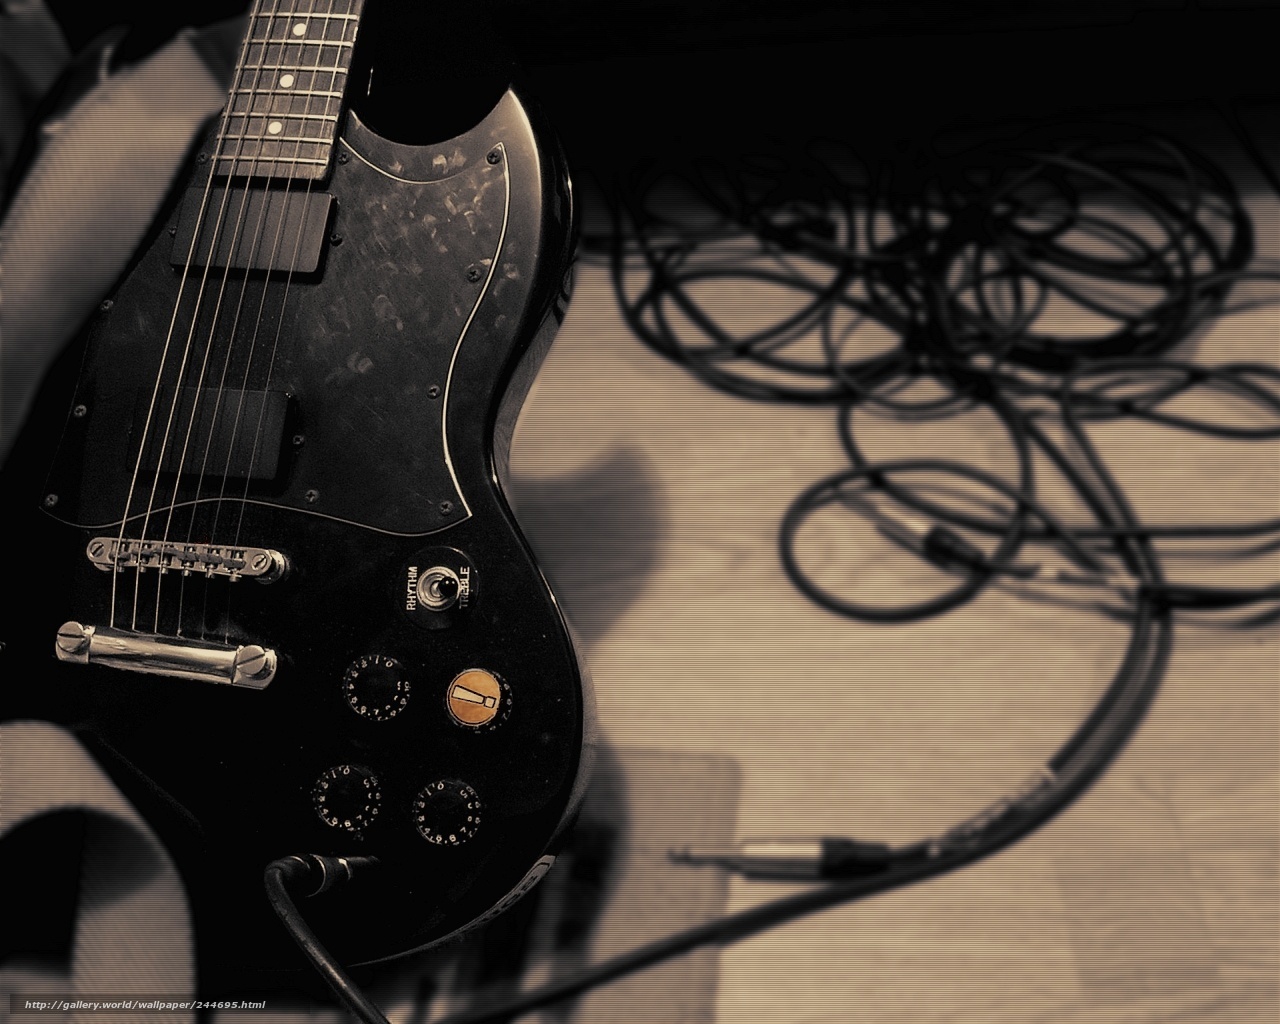 Wallpaper Guitar Amplifier Music Desktop In